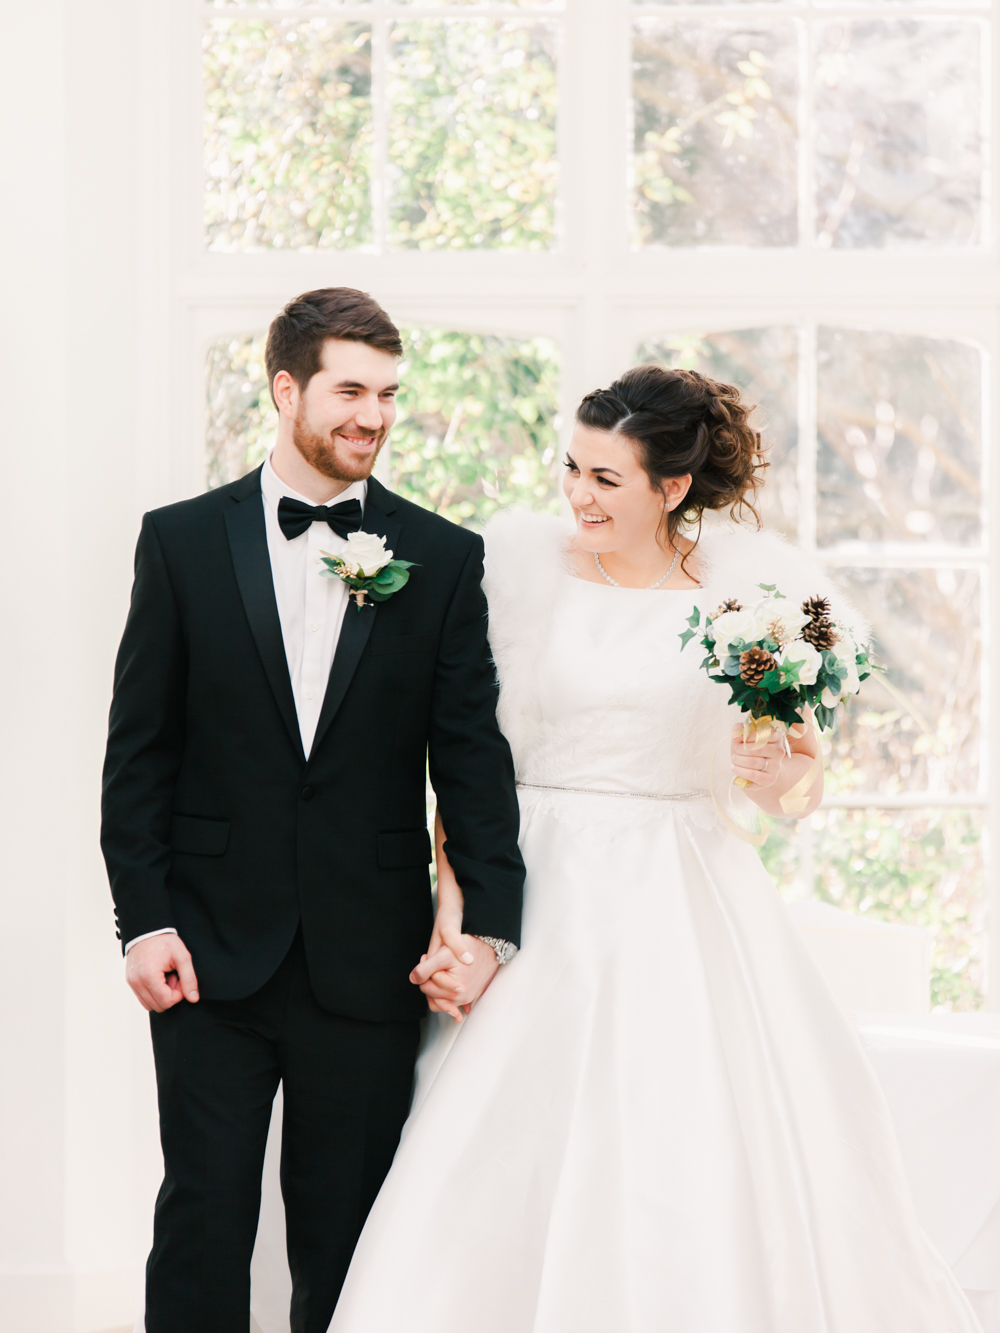 Bride wearing winter wedding dress and Groom wearing black tuxedo walk down the aisle smiling in Somerset Orangery